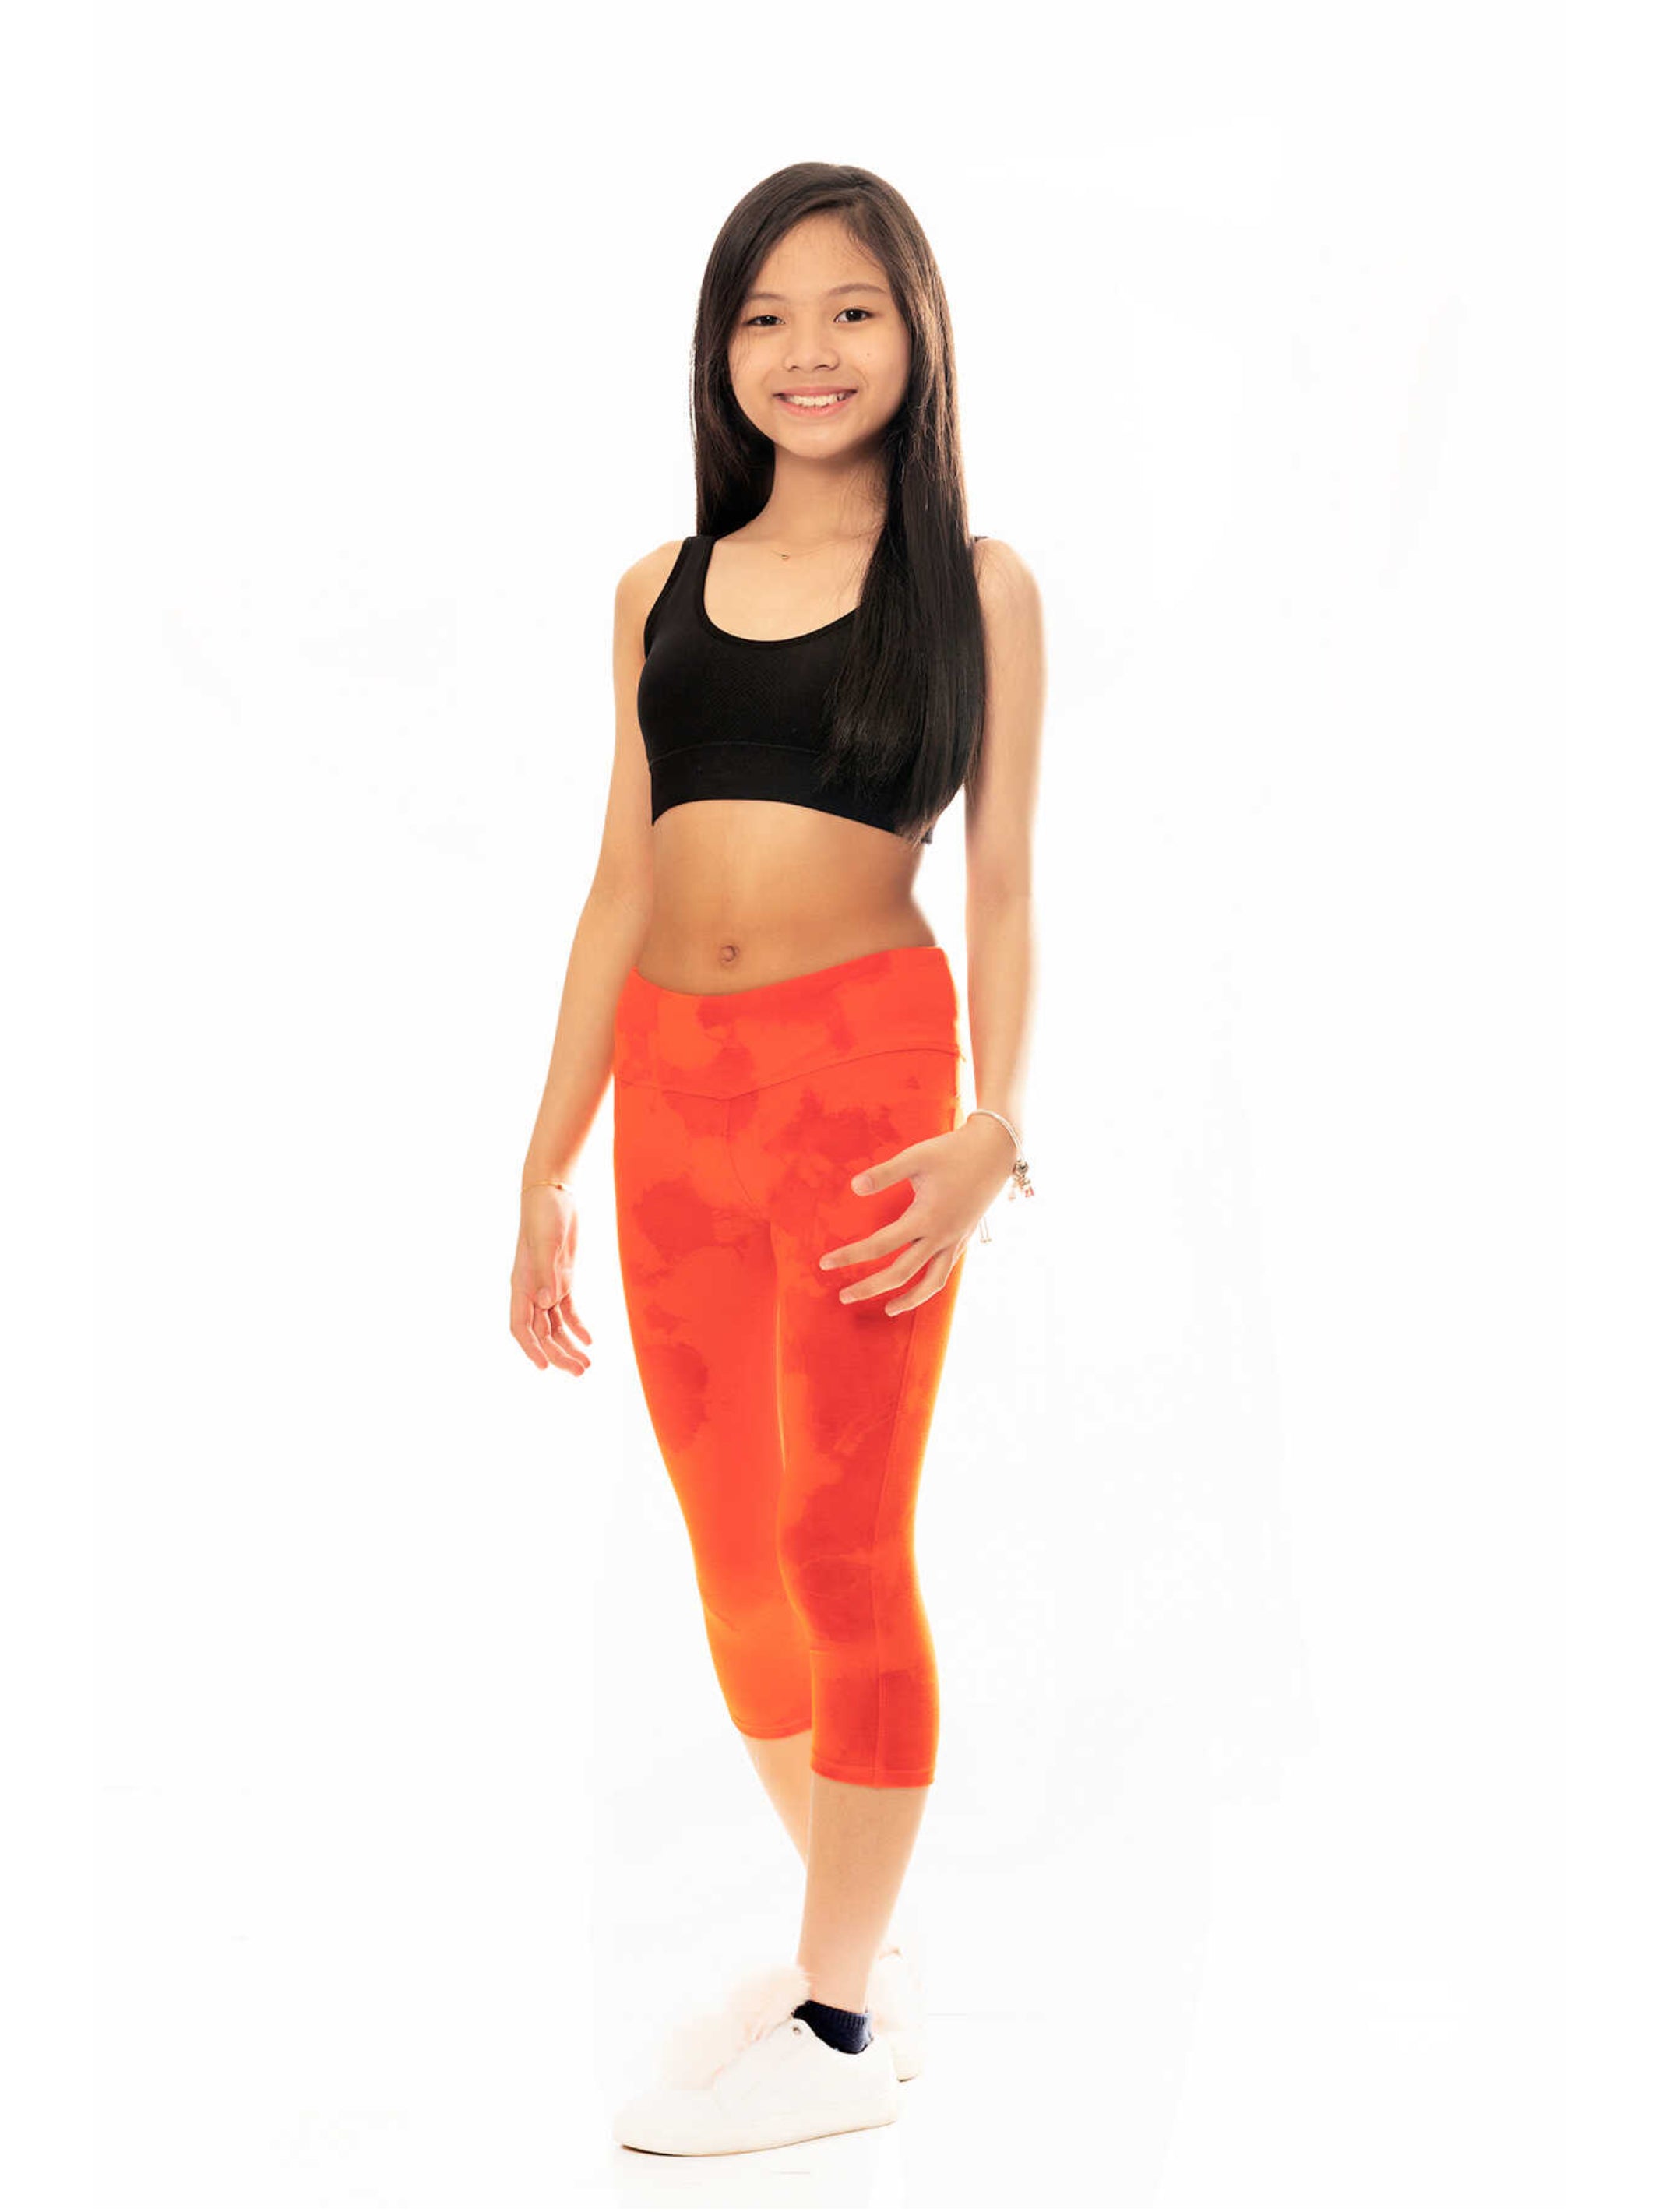 Diesel Melon Orange Crop Top LARGE Tie Waist Activewear Logo Streetwear  Sporty - $39 - From Margaret